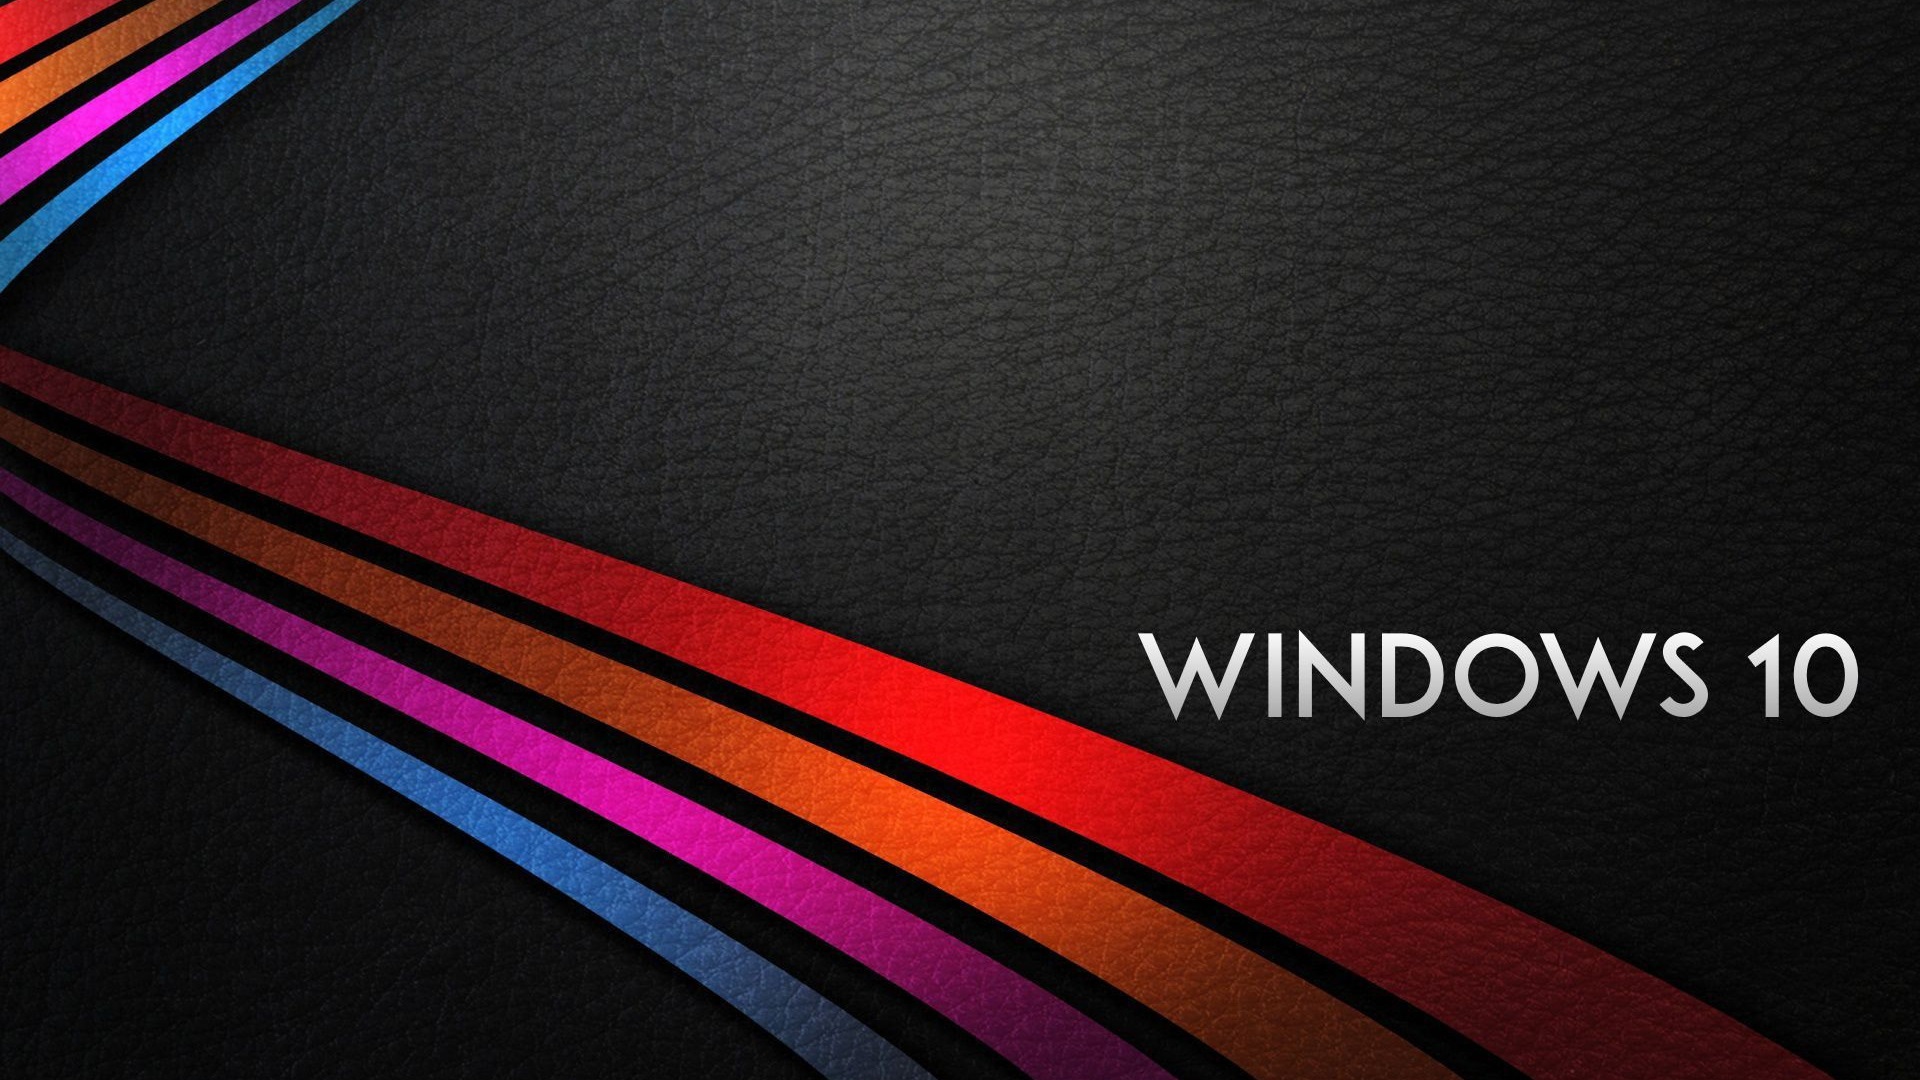 Windows - 10 - system - rainbow - stripes - background_1920x1080.jpg